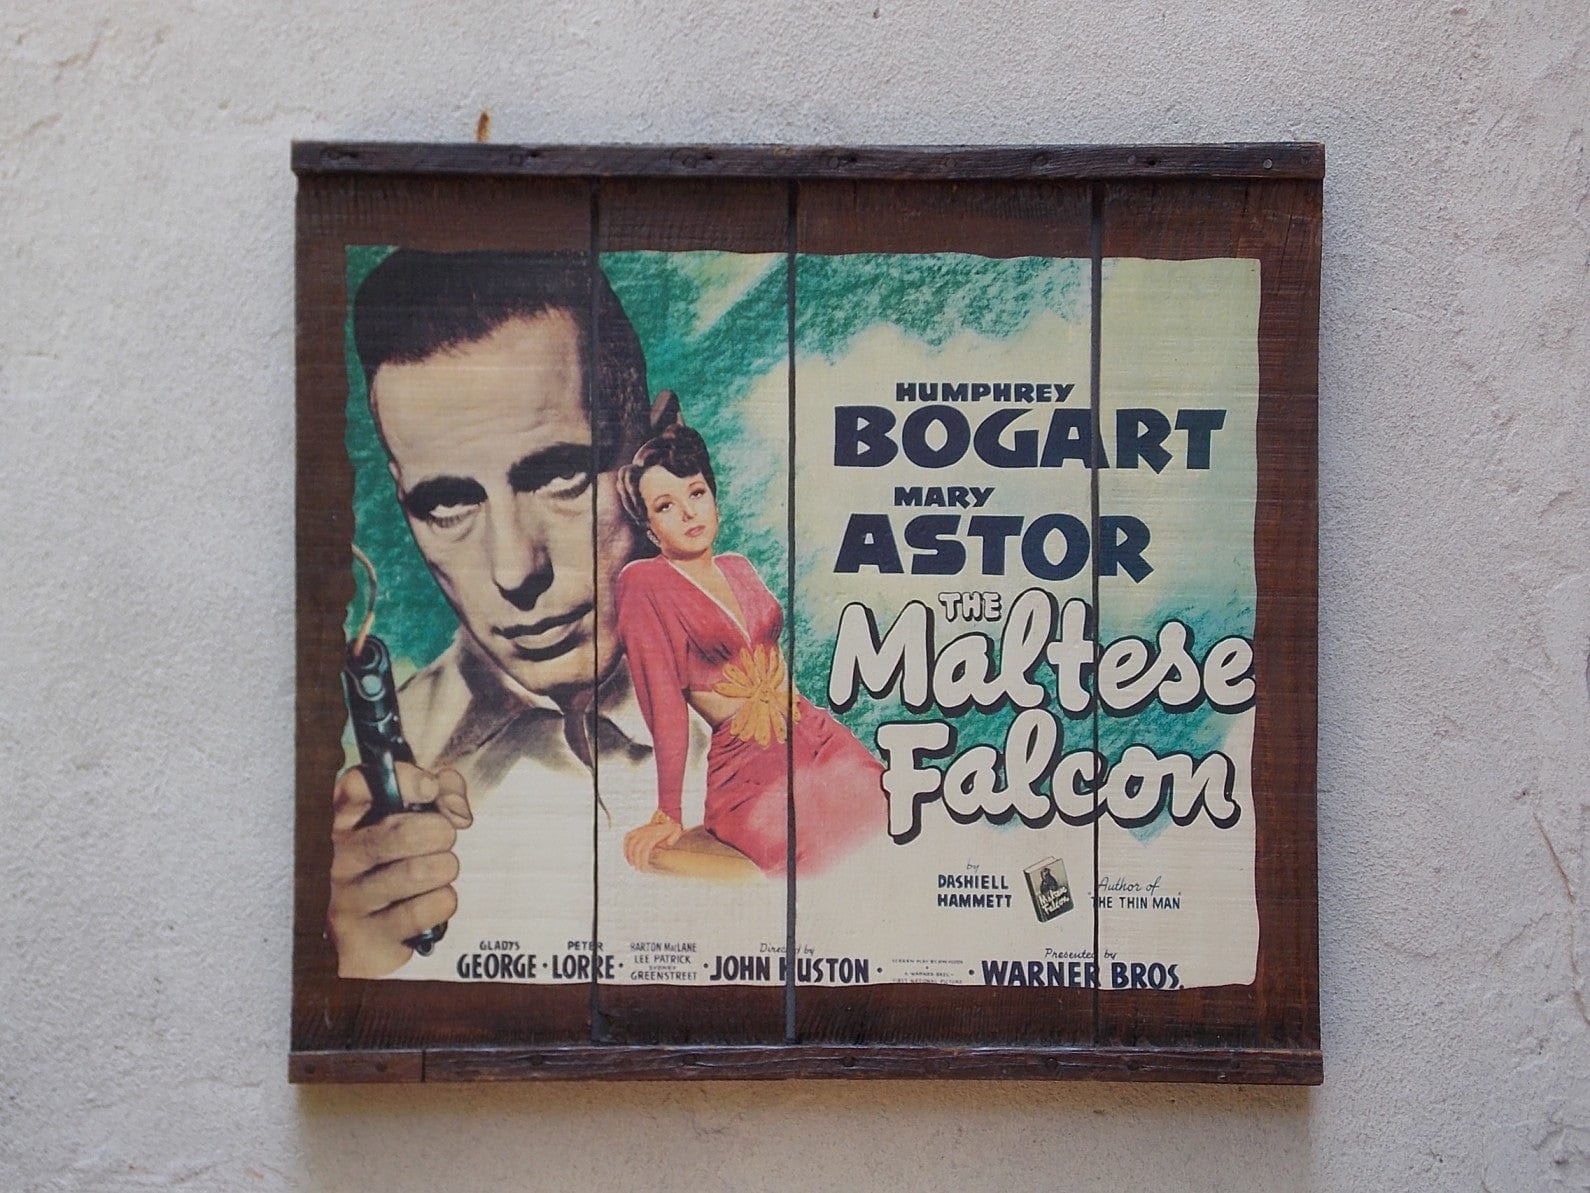 I Like Mike's Mid Century Modern Wall Decor & Art The Maltese Falcon Movie Poster on Wooden Raisin Box